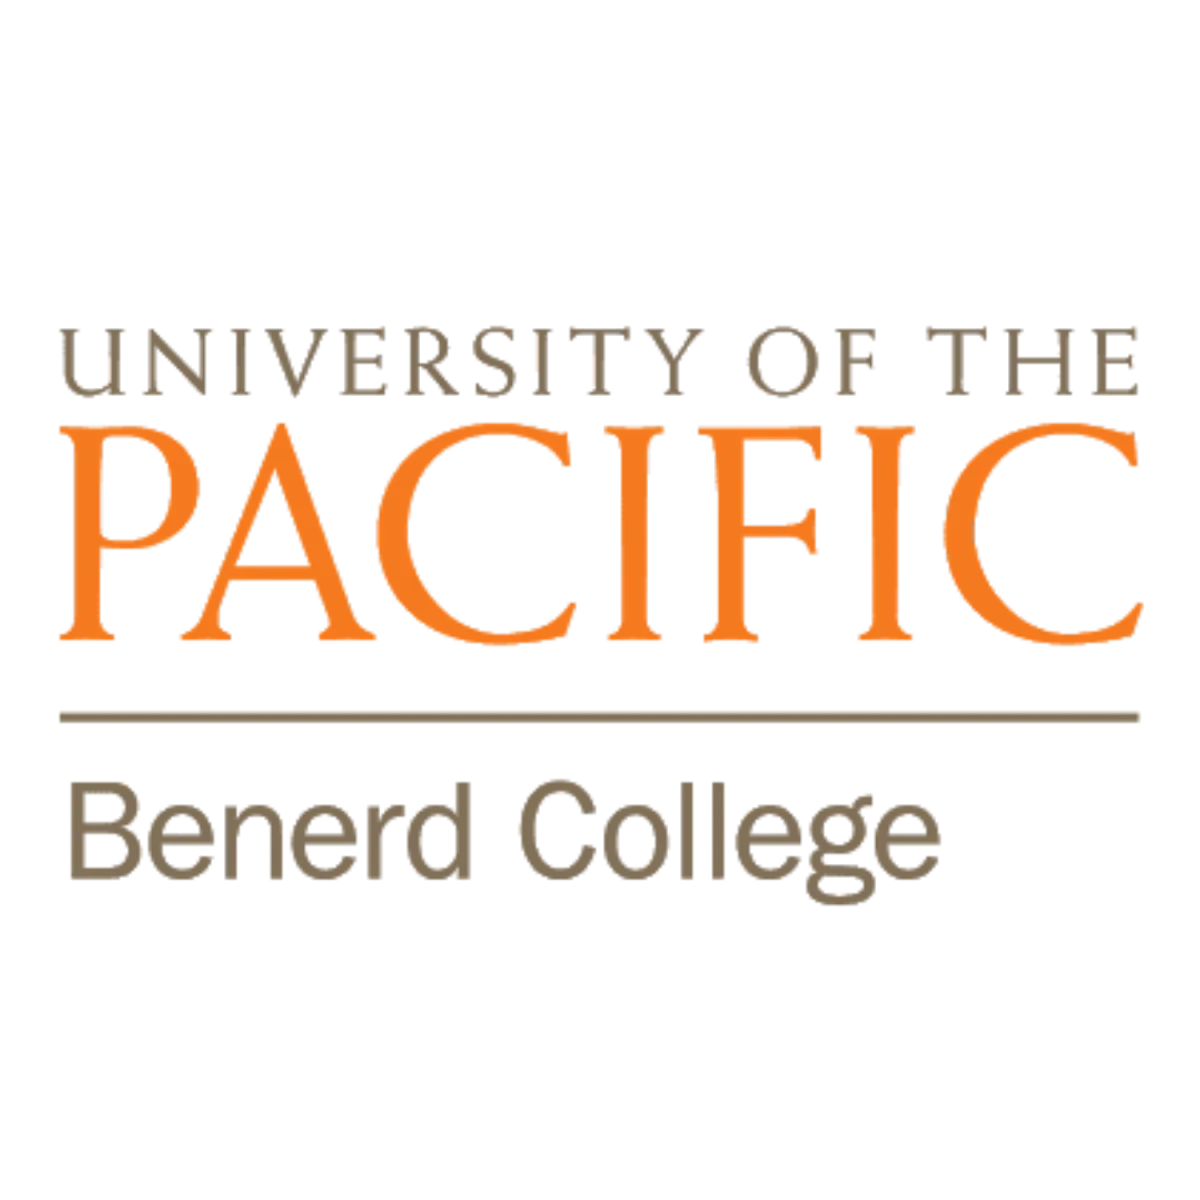 University of the Pacific/Benerd College